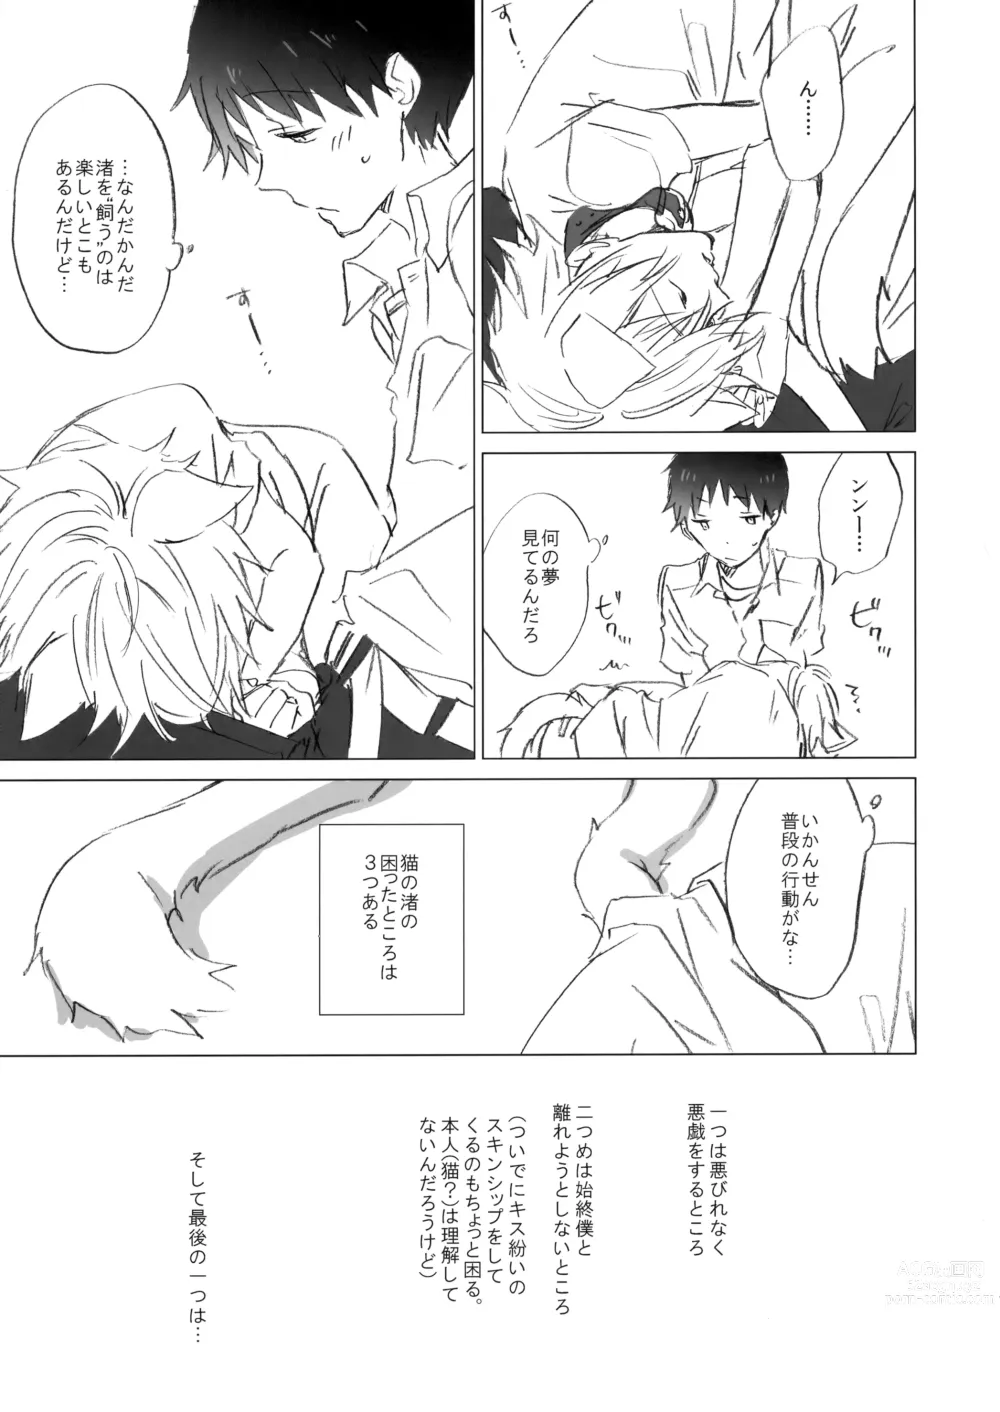 Page 6 of doujinshi NECOKARE